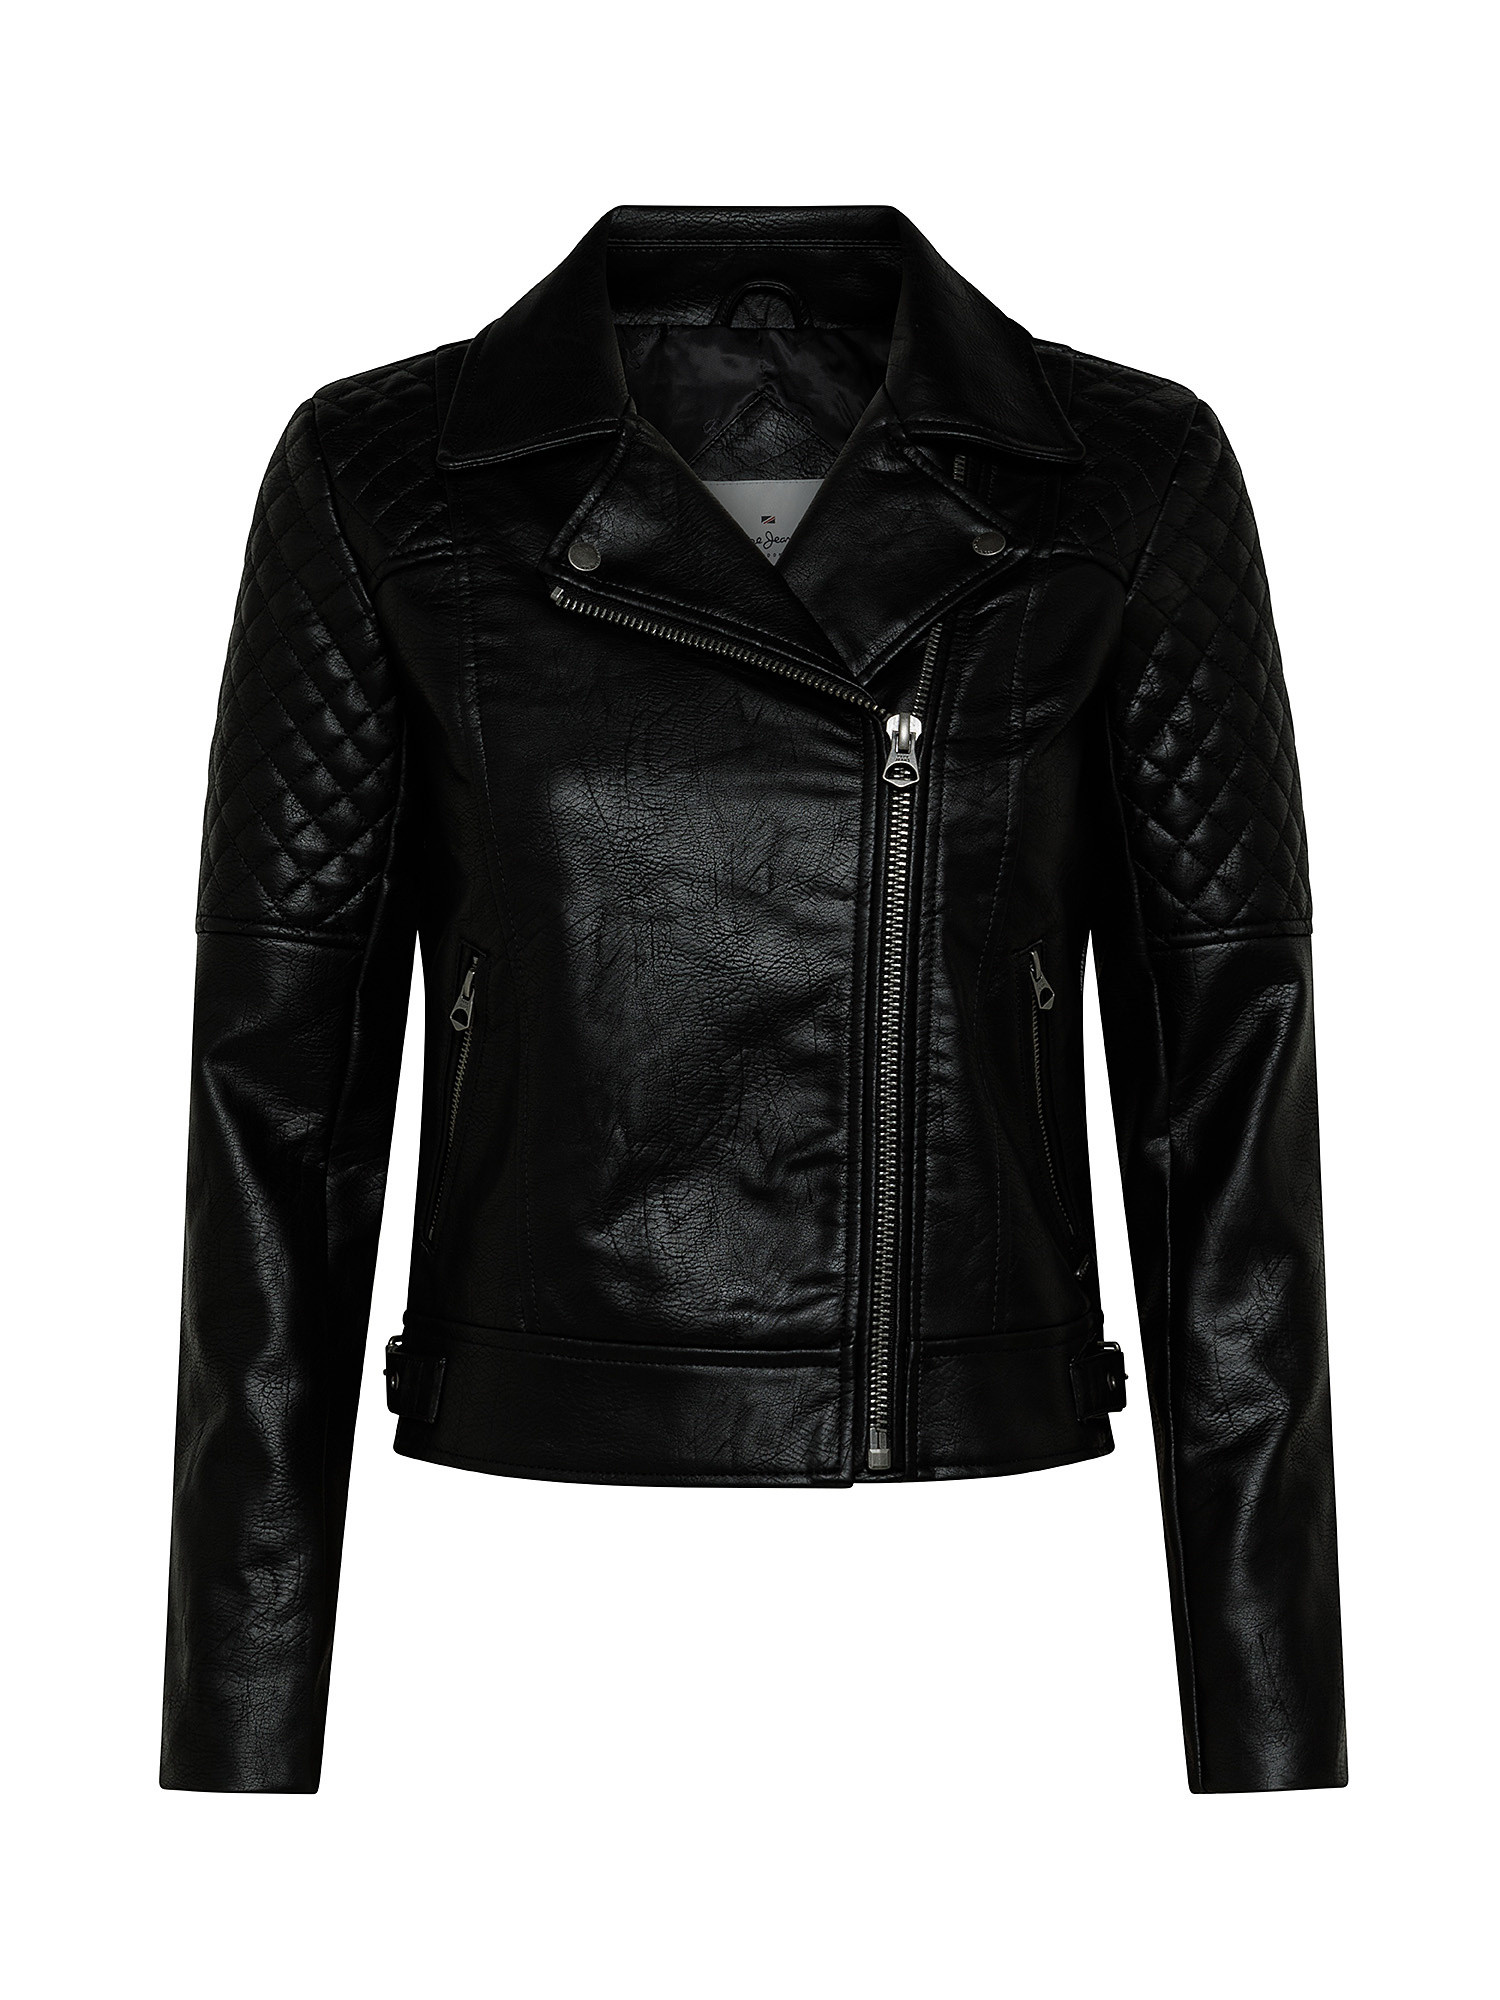 Astrid turn-up collar motorcycle jacket, Black, large image number 0